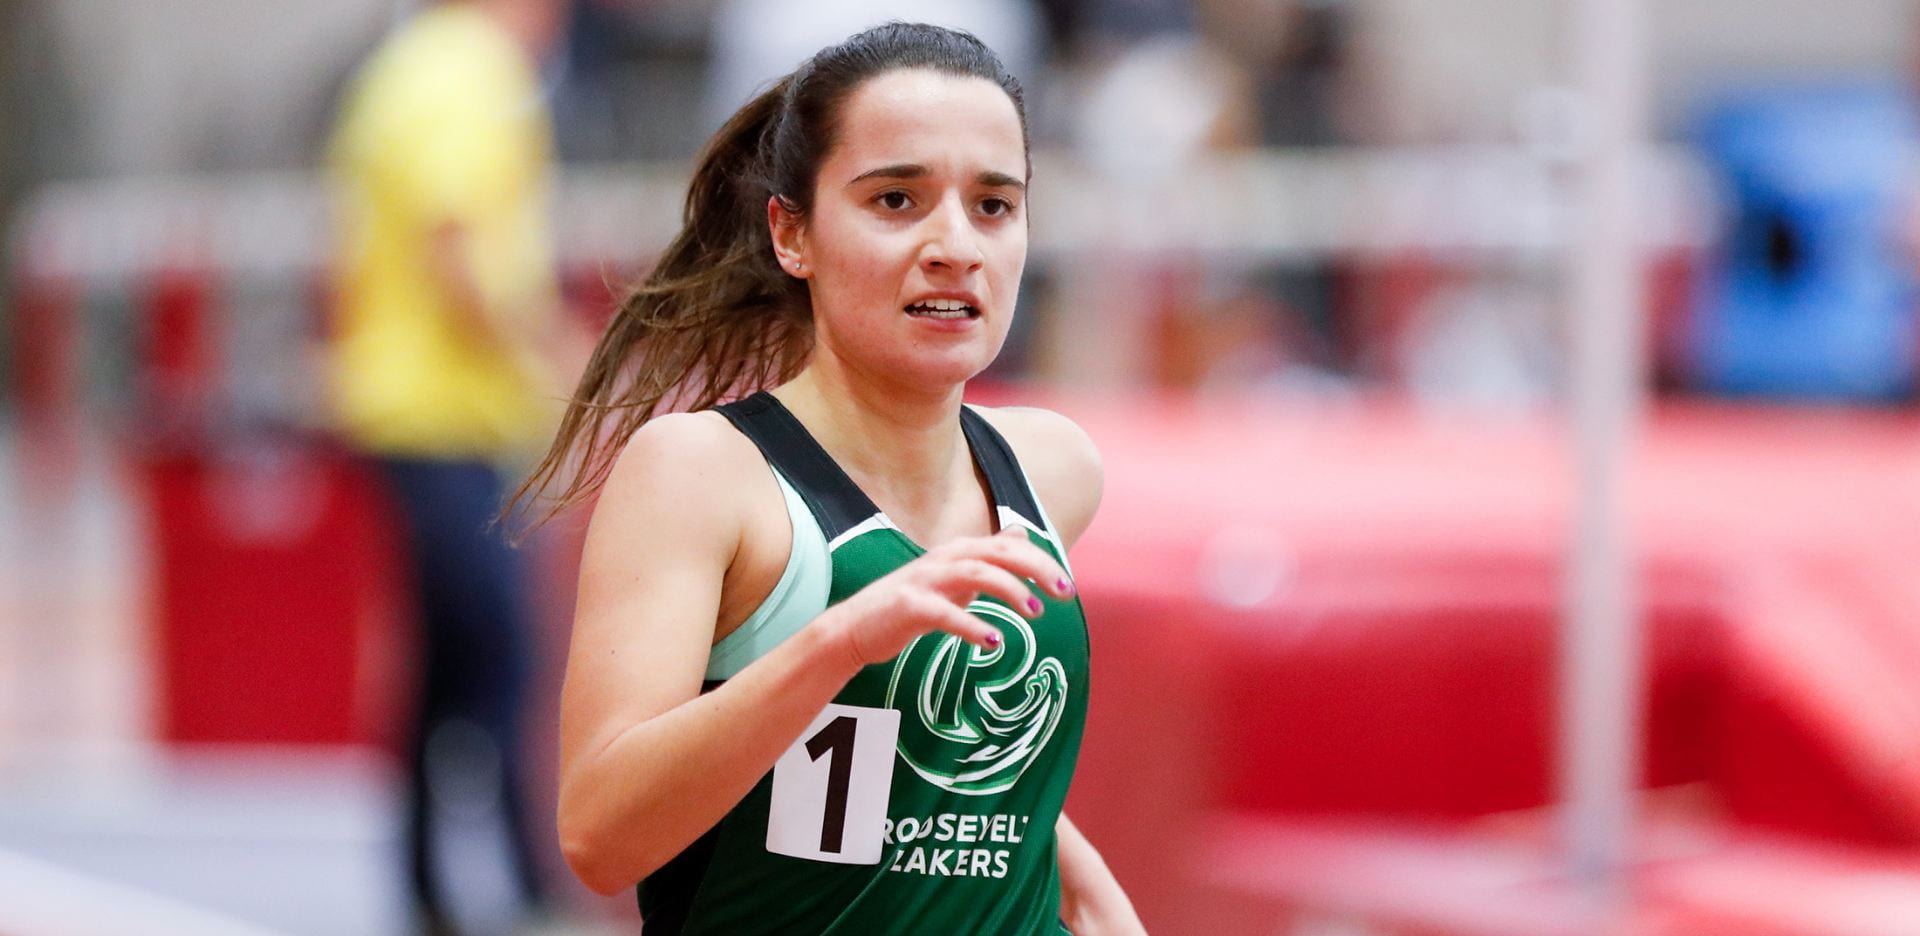 Roosevelt student-athlete Gina Narcisi runs on the track.